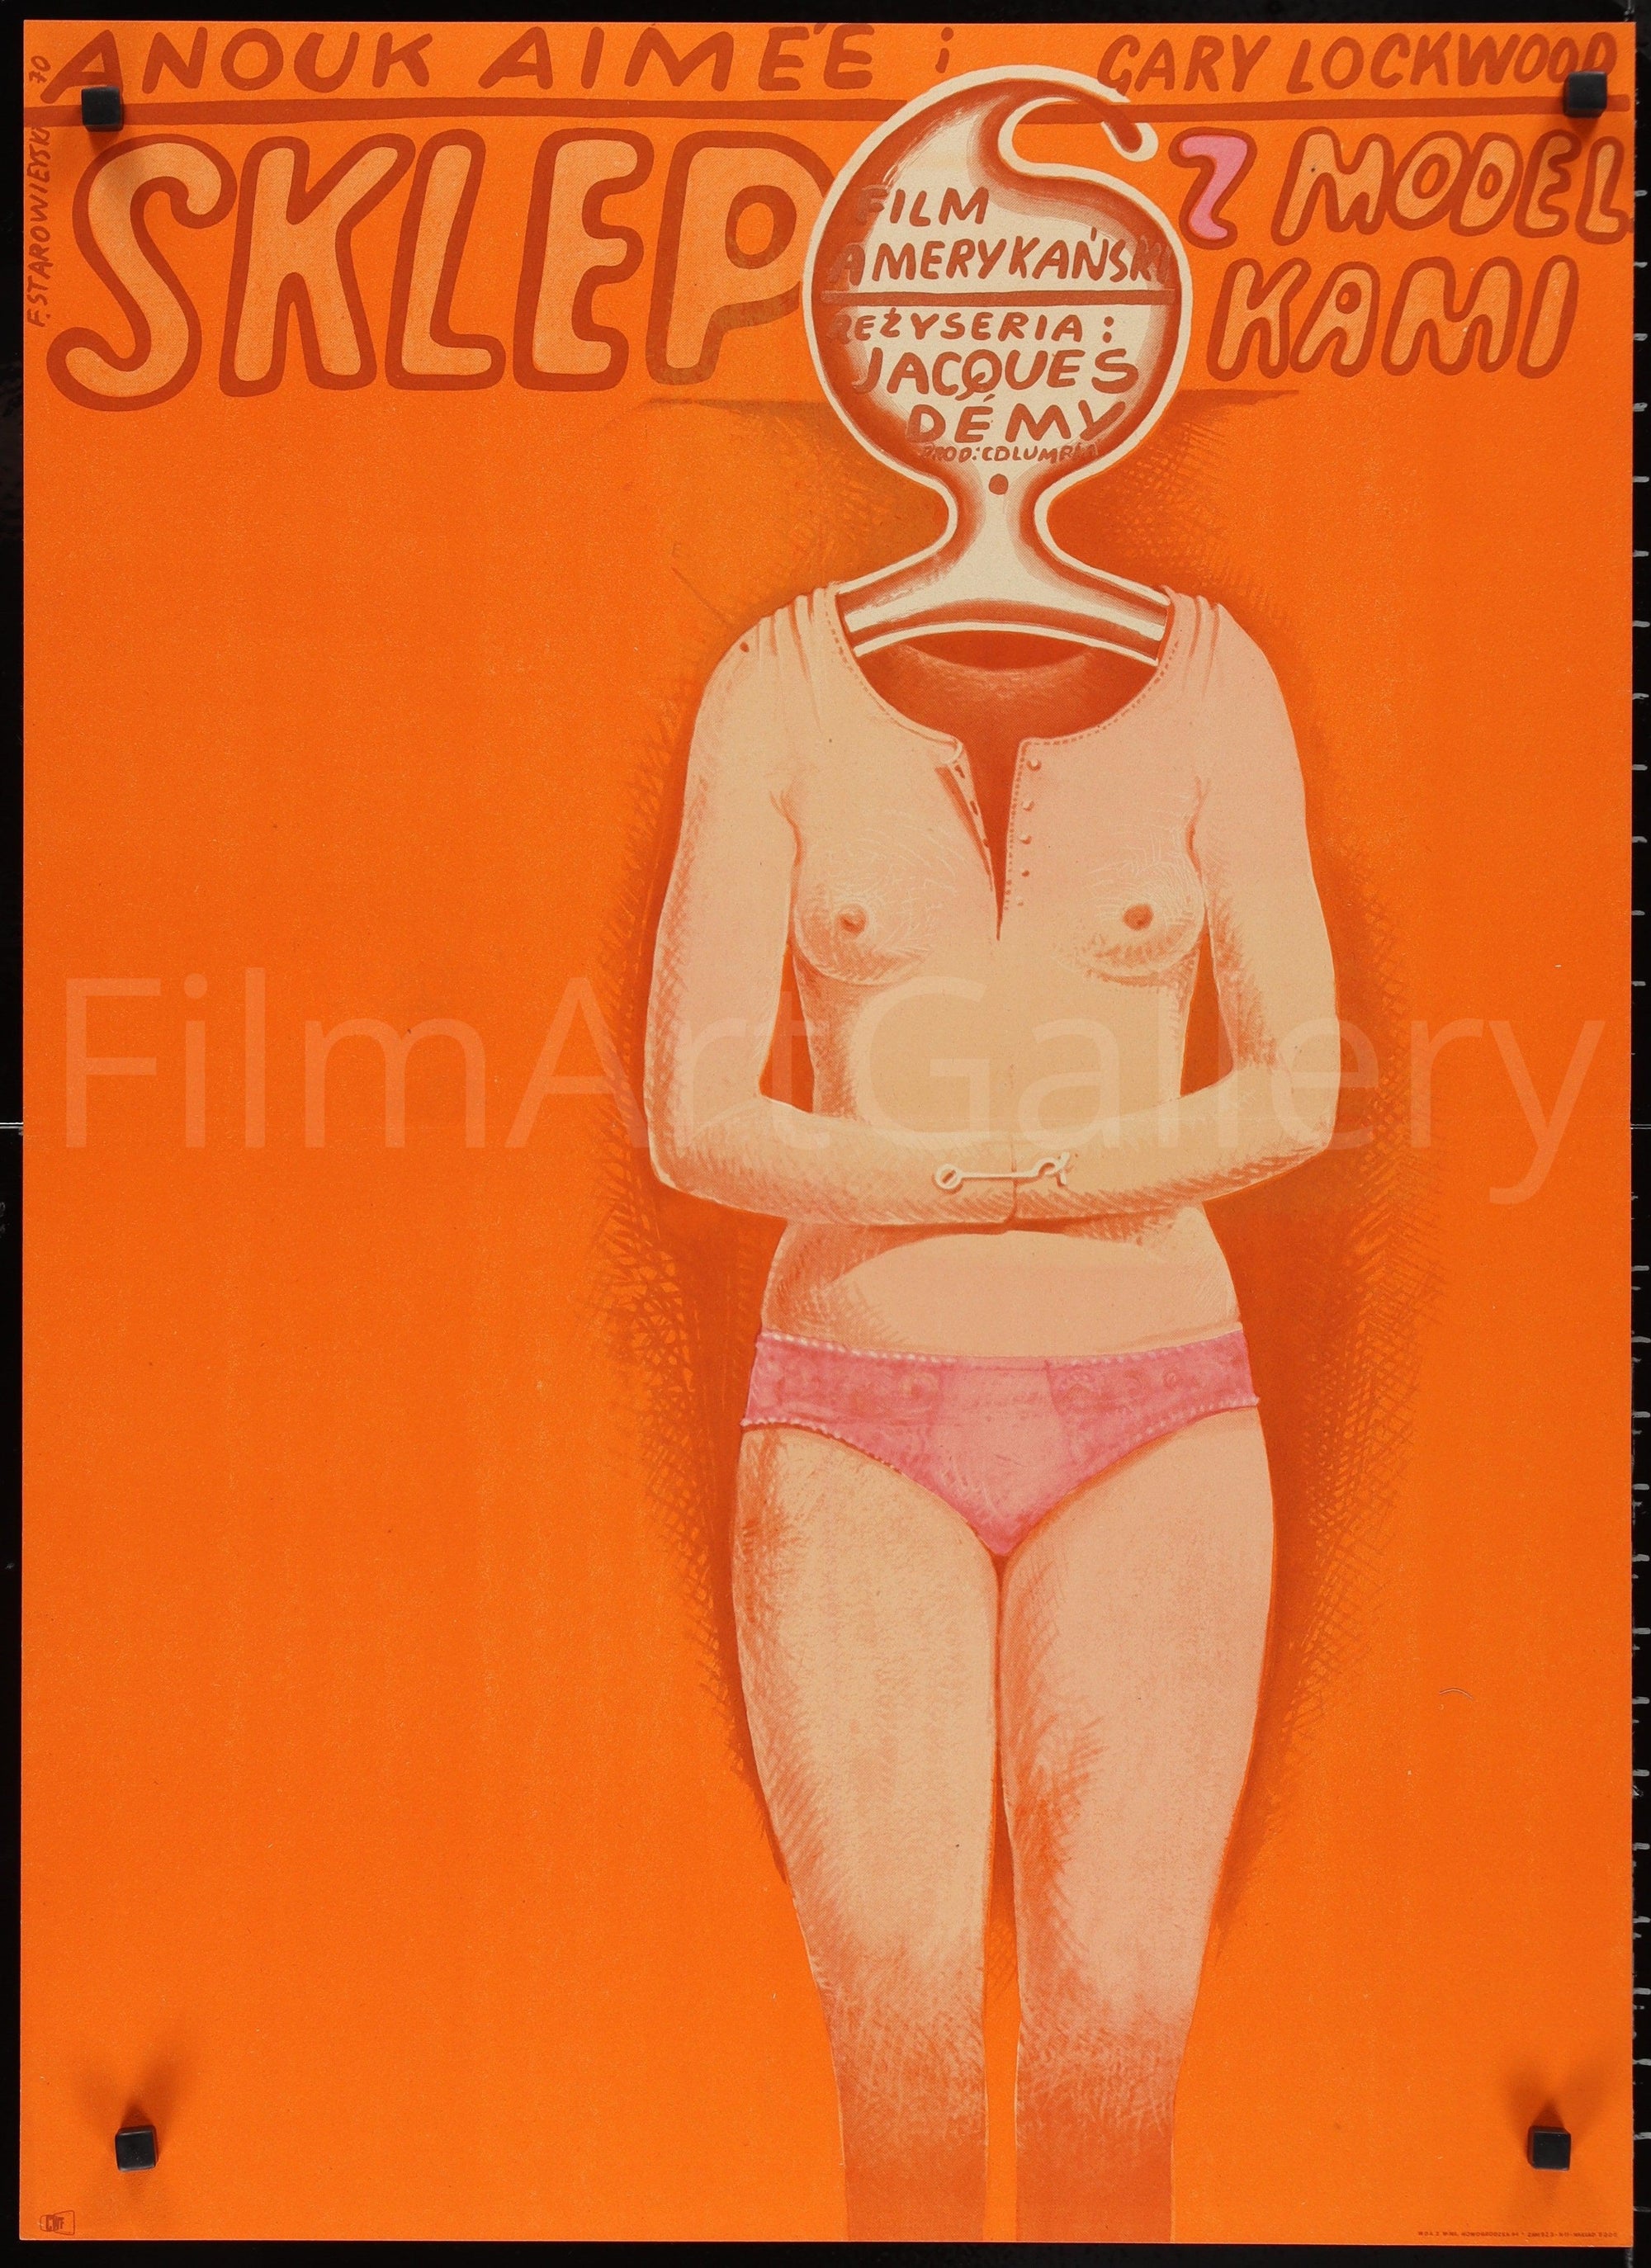 Model Shop Polish A1 (23x33) Original Vintage Movie Poster